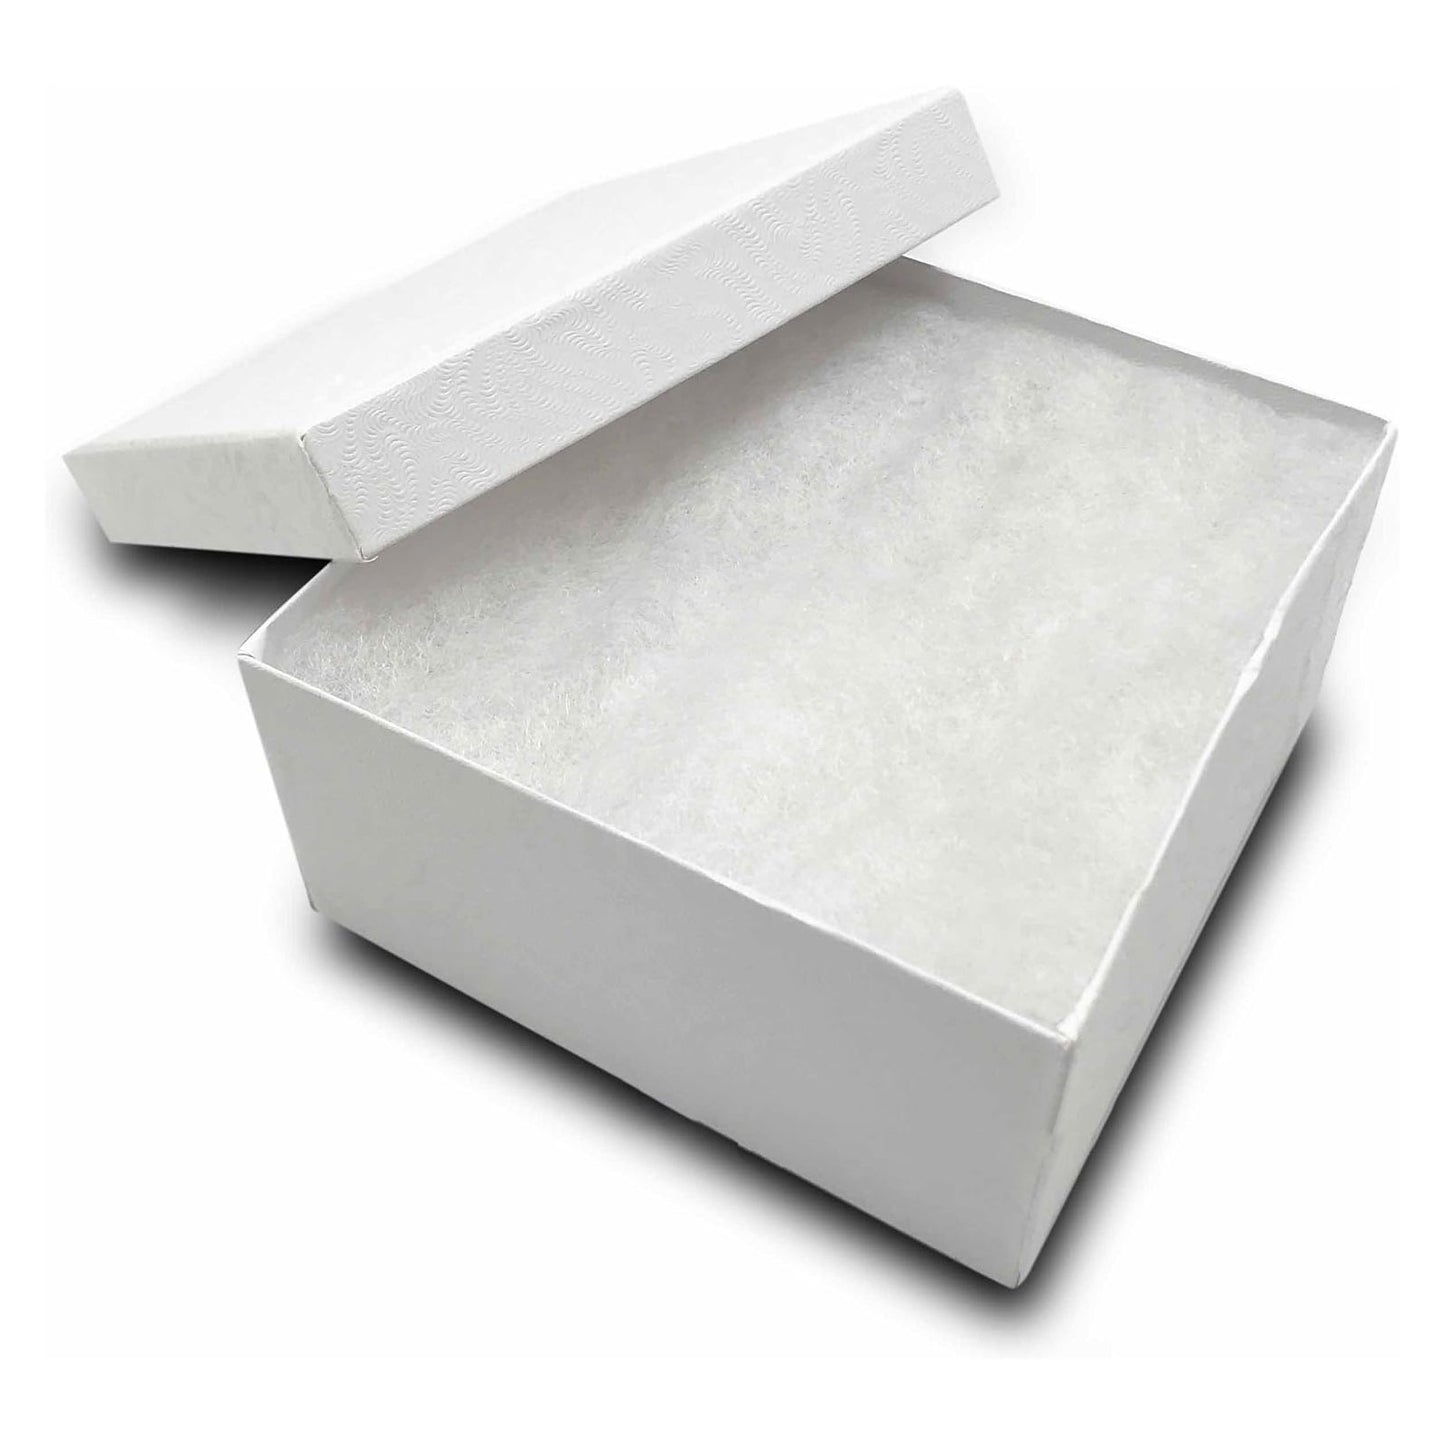 3 3/4" x 3 3/4" x 2" White Swirl Cotton Filled Jewelry Boxes